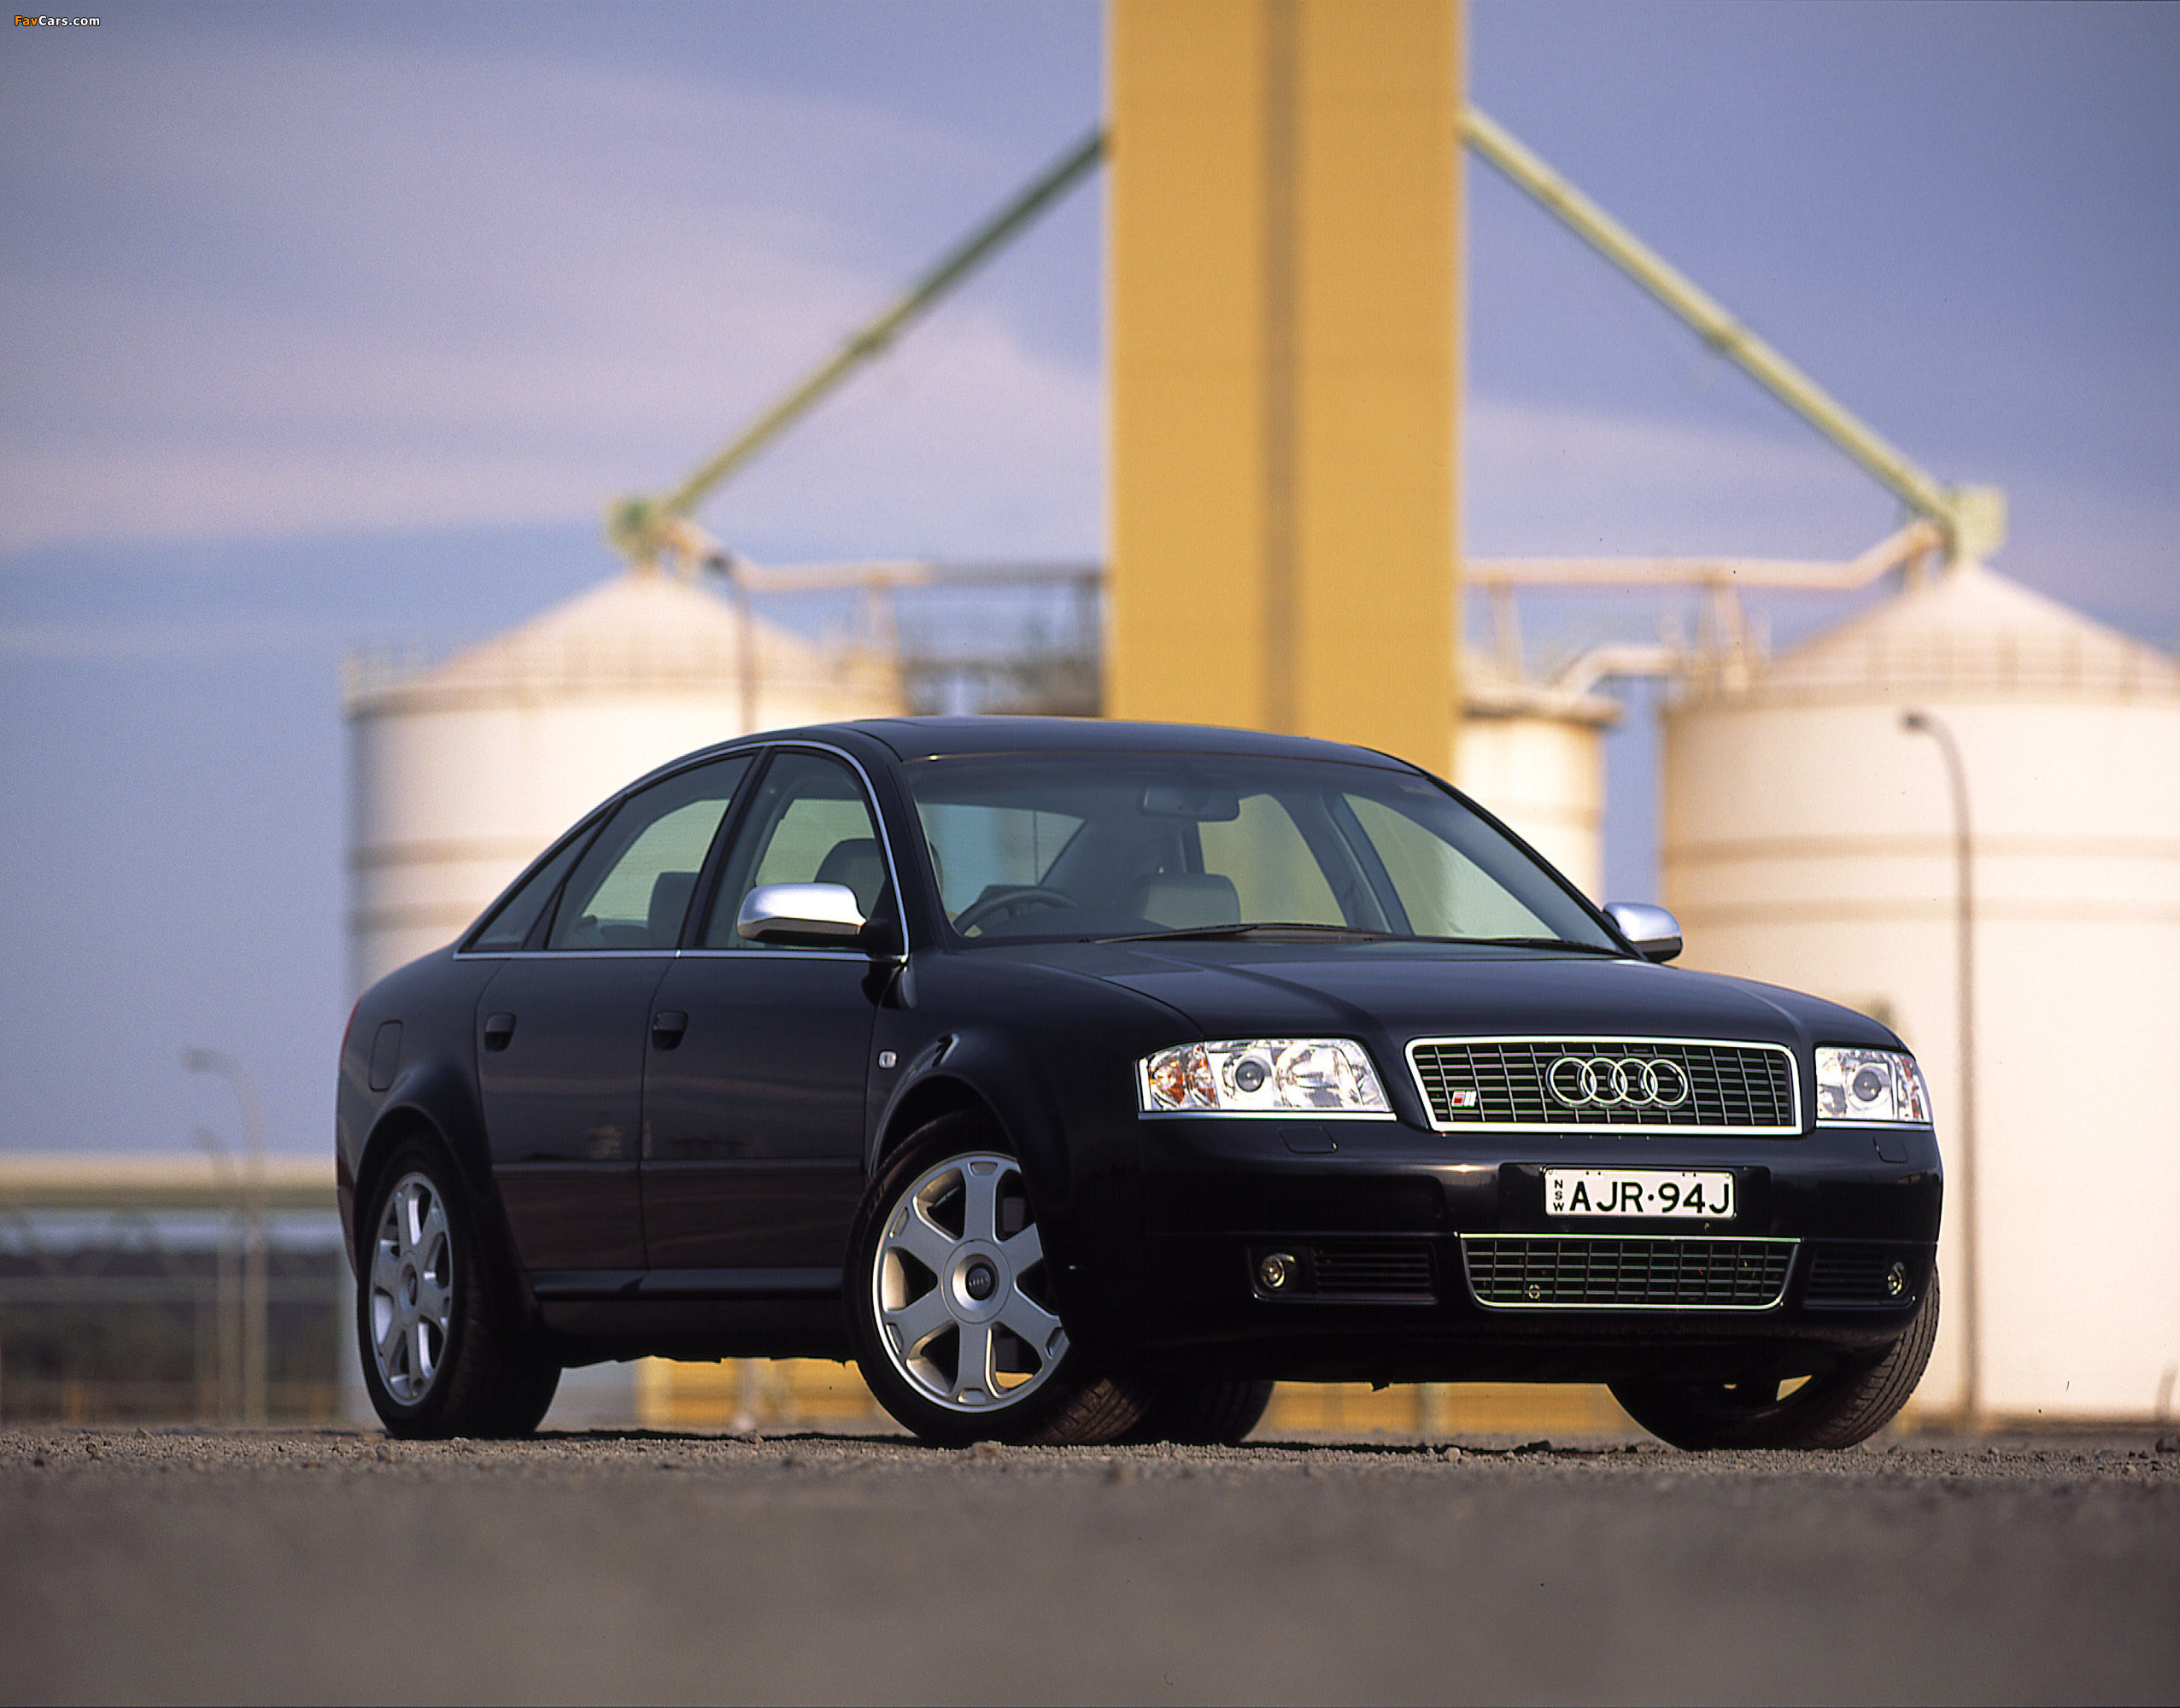 Ауди а6 с5 2001 год. Audi a6 c5 2000. Audi s6 2000. Audi s6 c5. Ауди s6 2001.